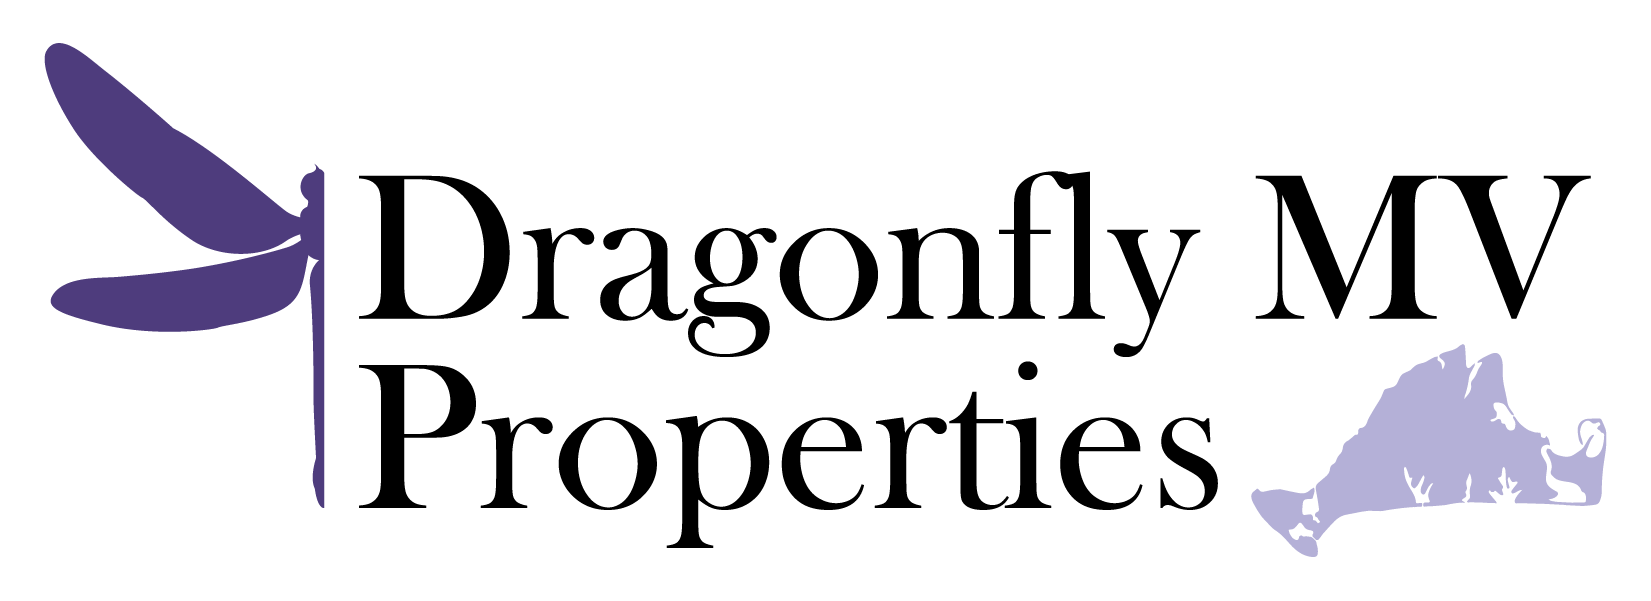 Dragonfly MV Properties